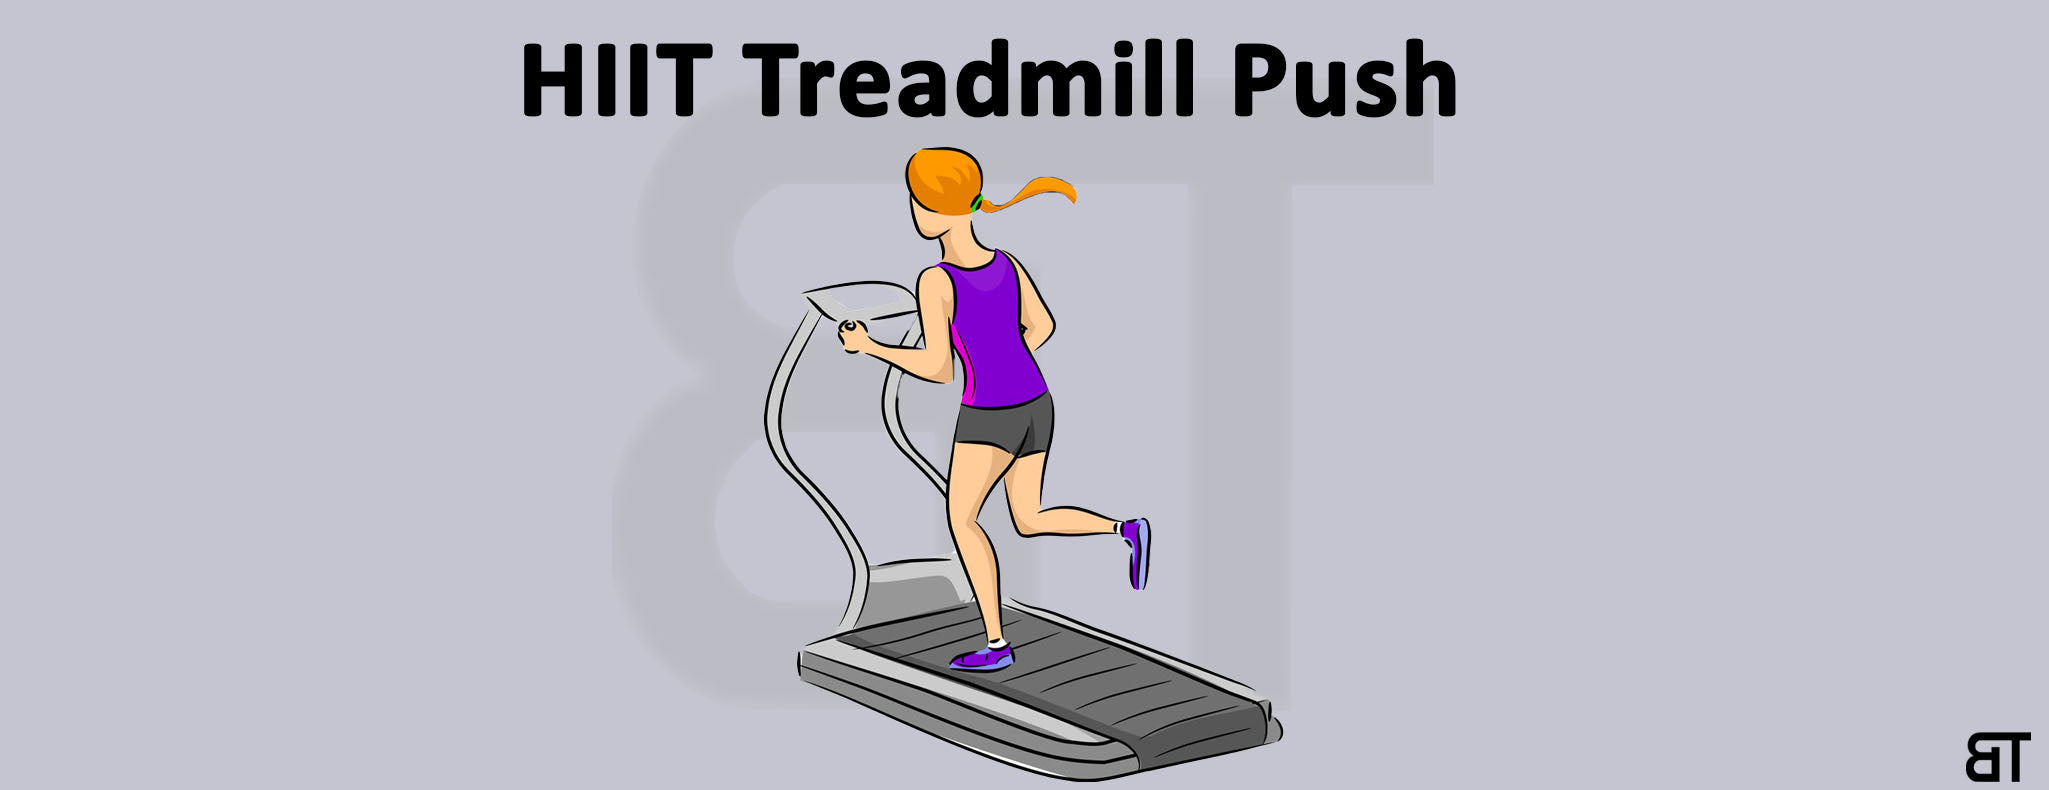 HIIT Treadmill Push